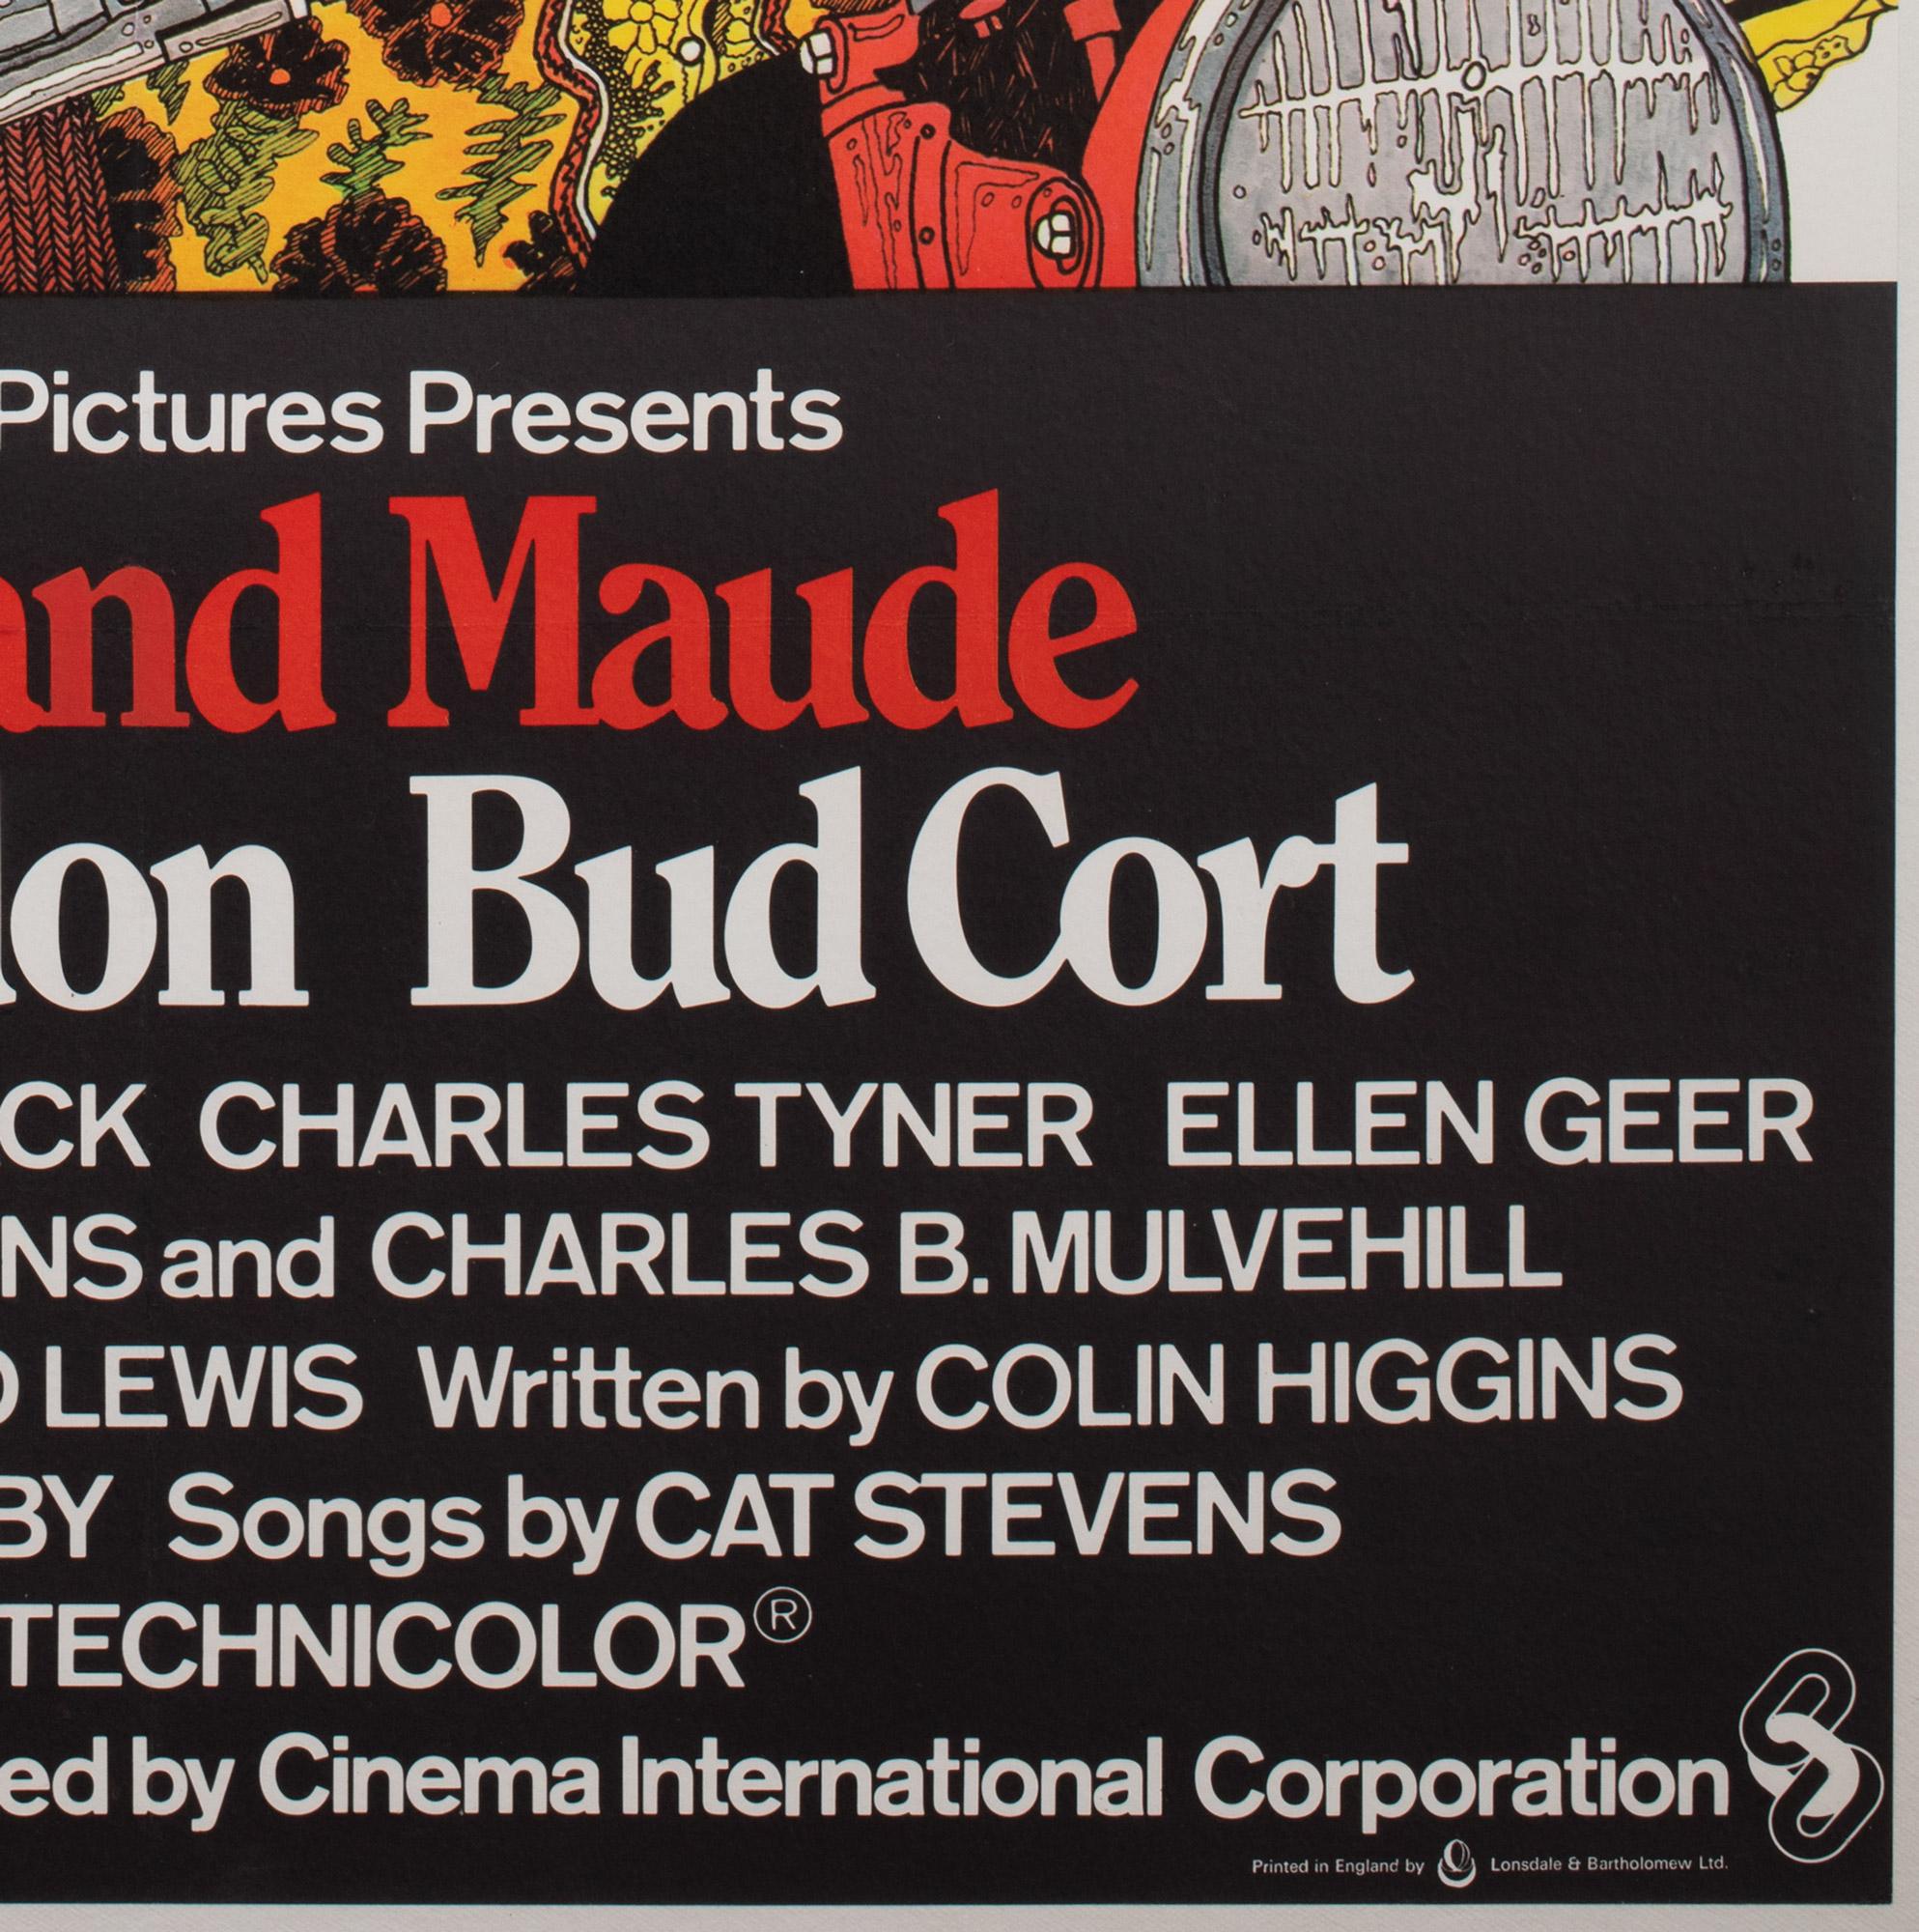 Harold and Maude Original 1972 UK 1 Sheet Film Movie Poster For Sale 1